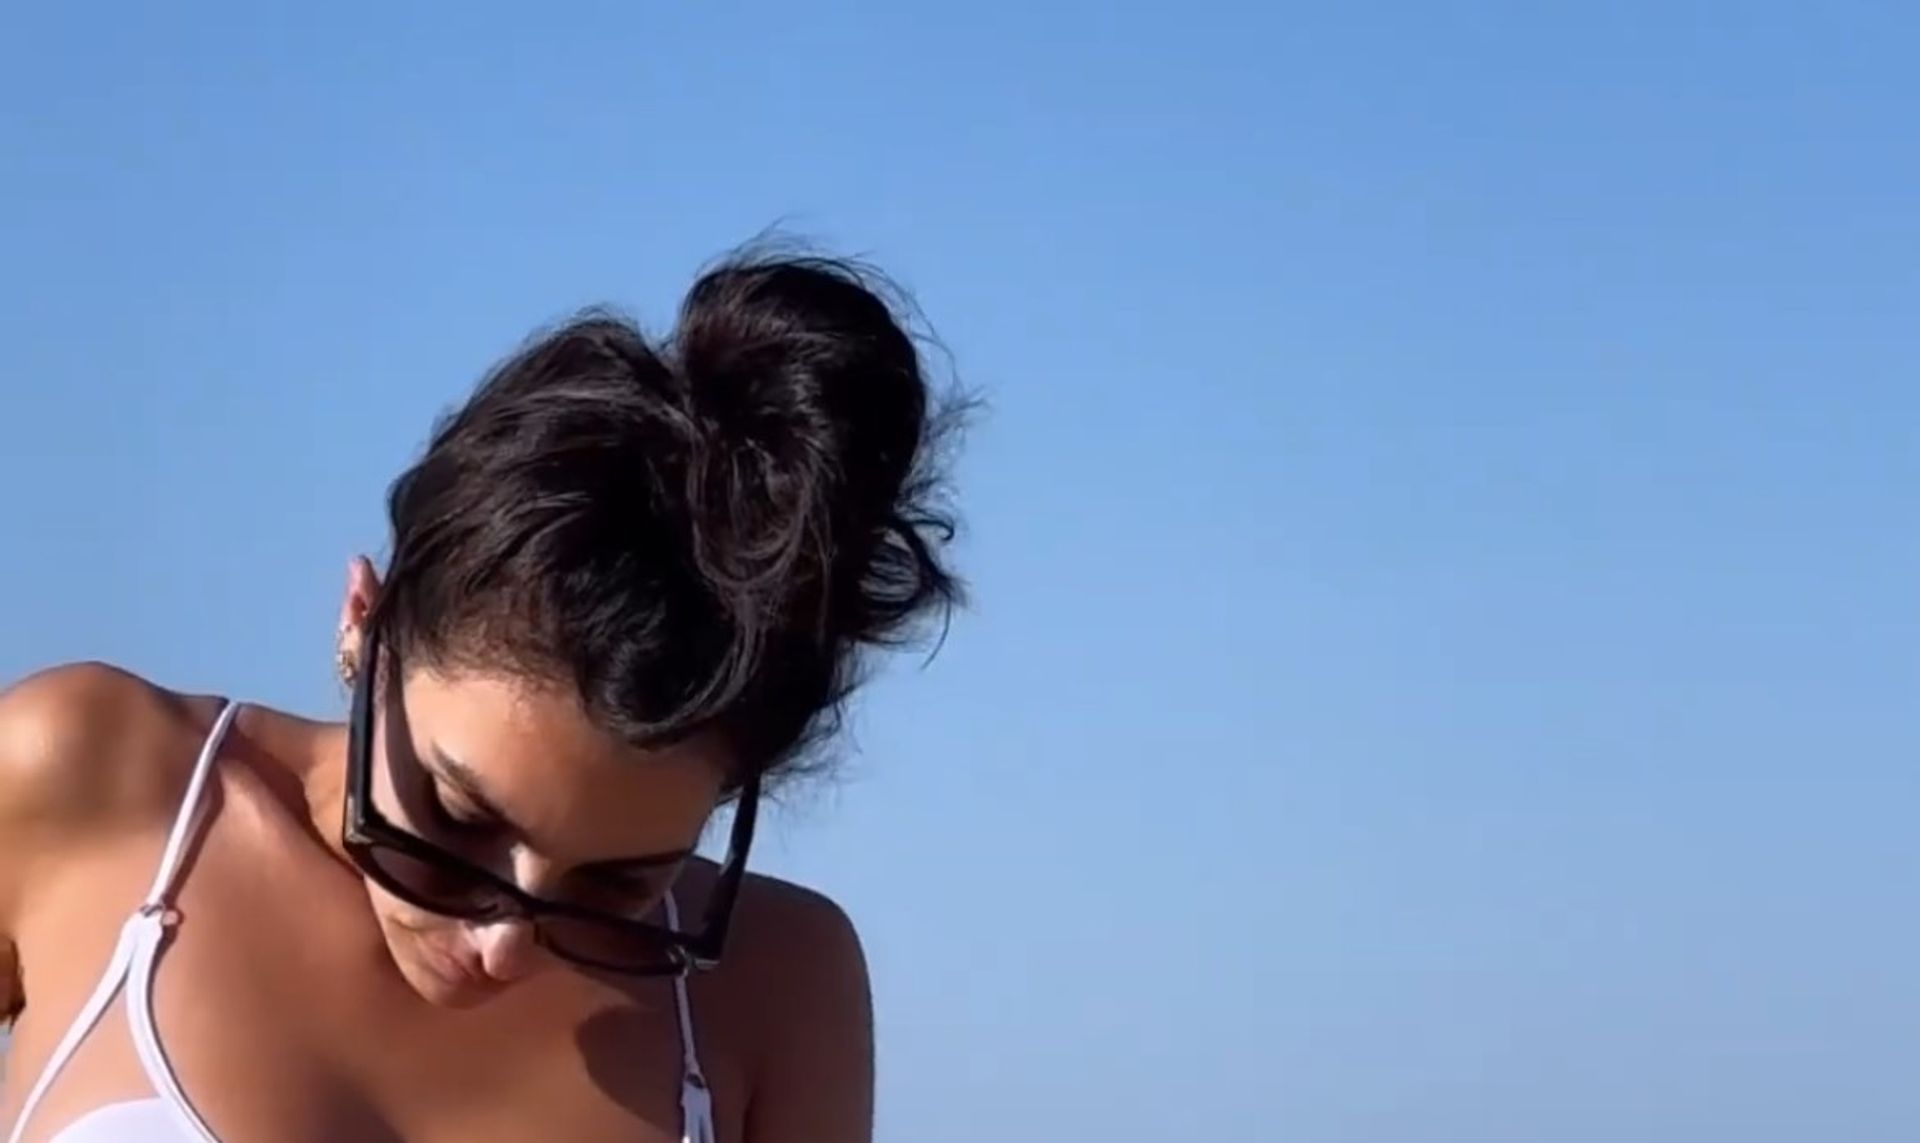 plak verzekering routine Video: Anna Nooshin geeft lichaam prijs in weinig verhullende bikini